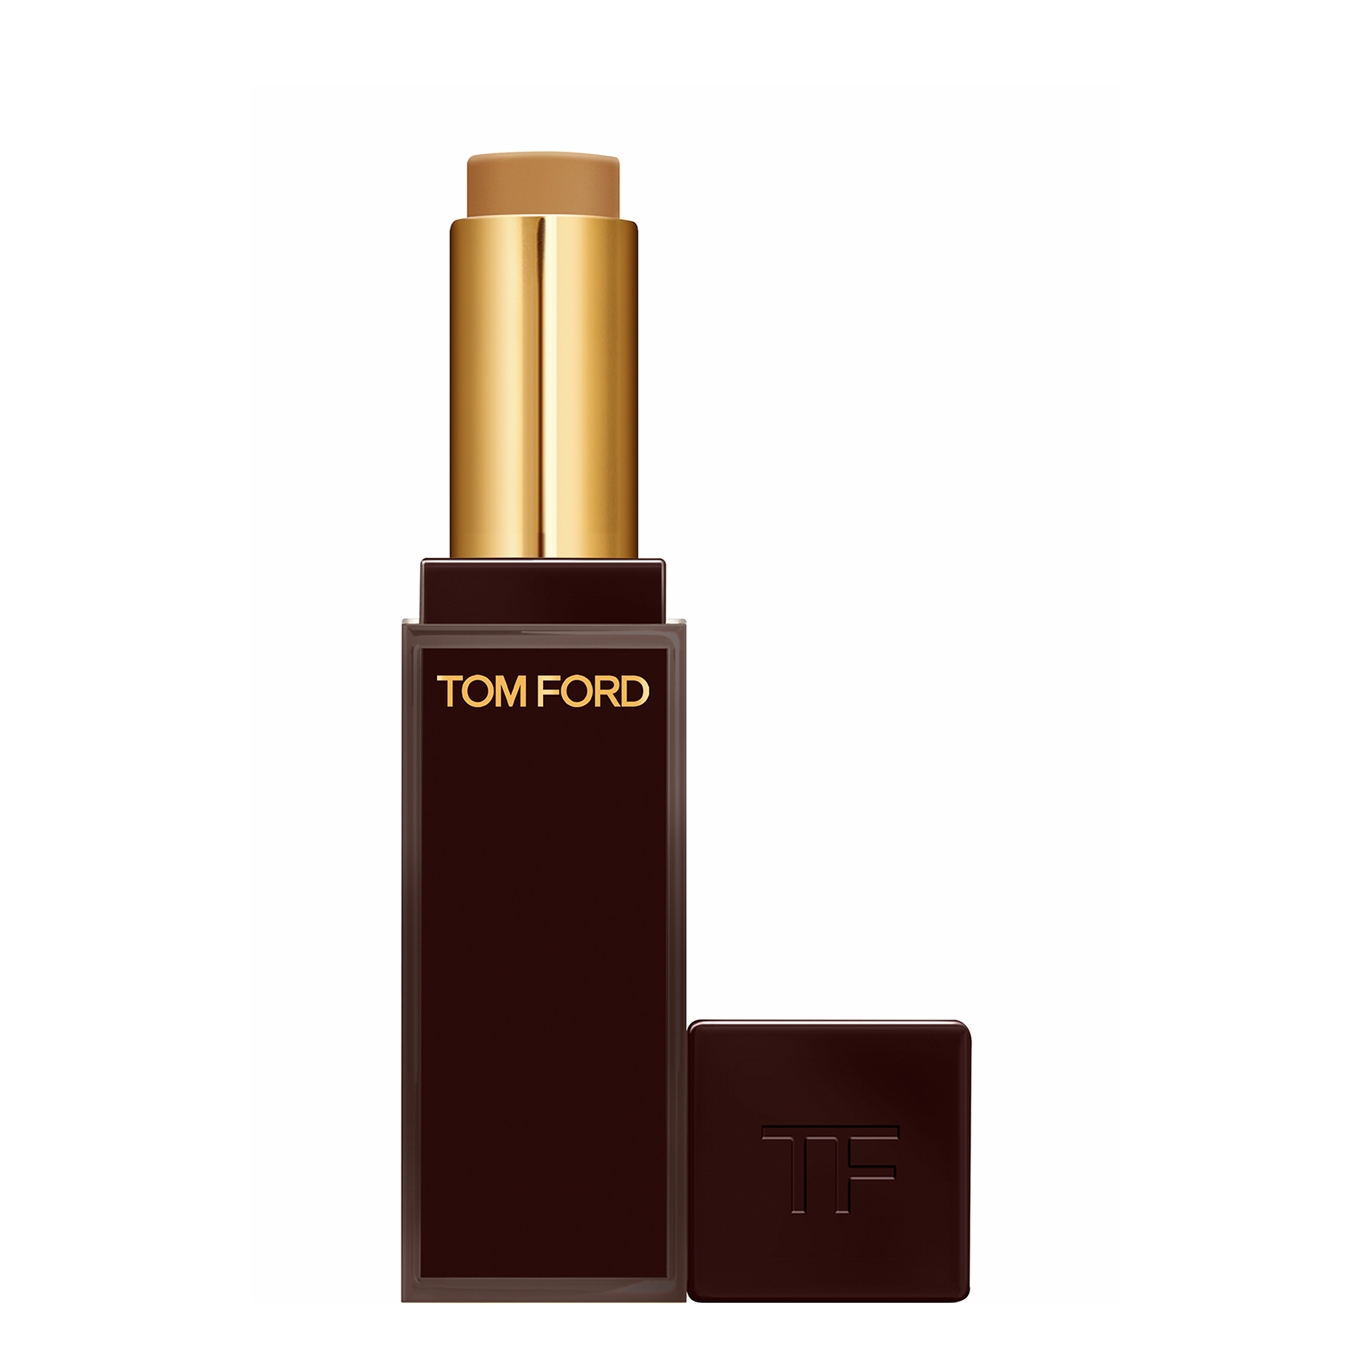 Tom Ford Traceless Soft Matte Concealer - Colour 6w0 Terra